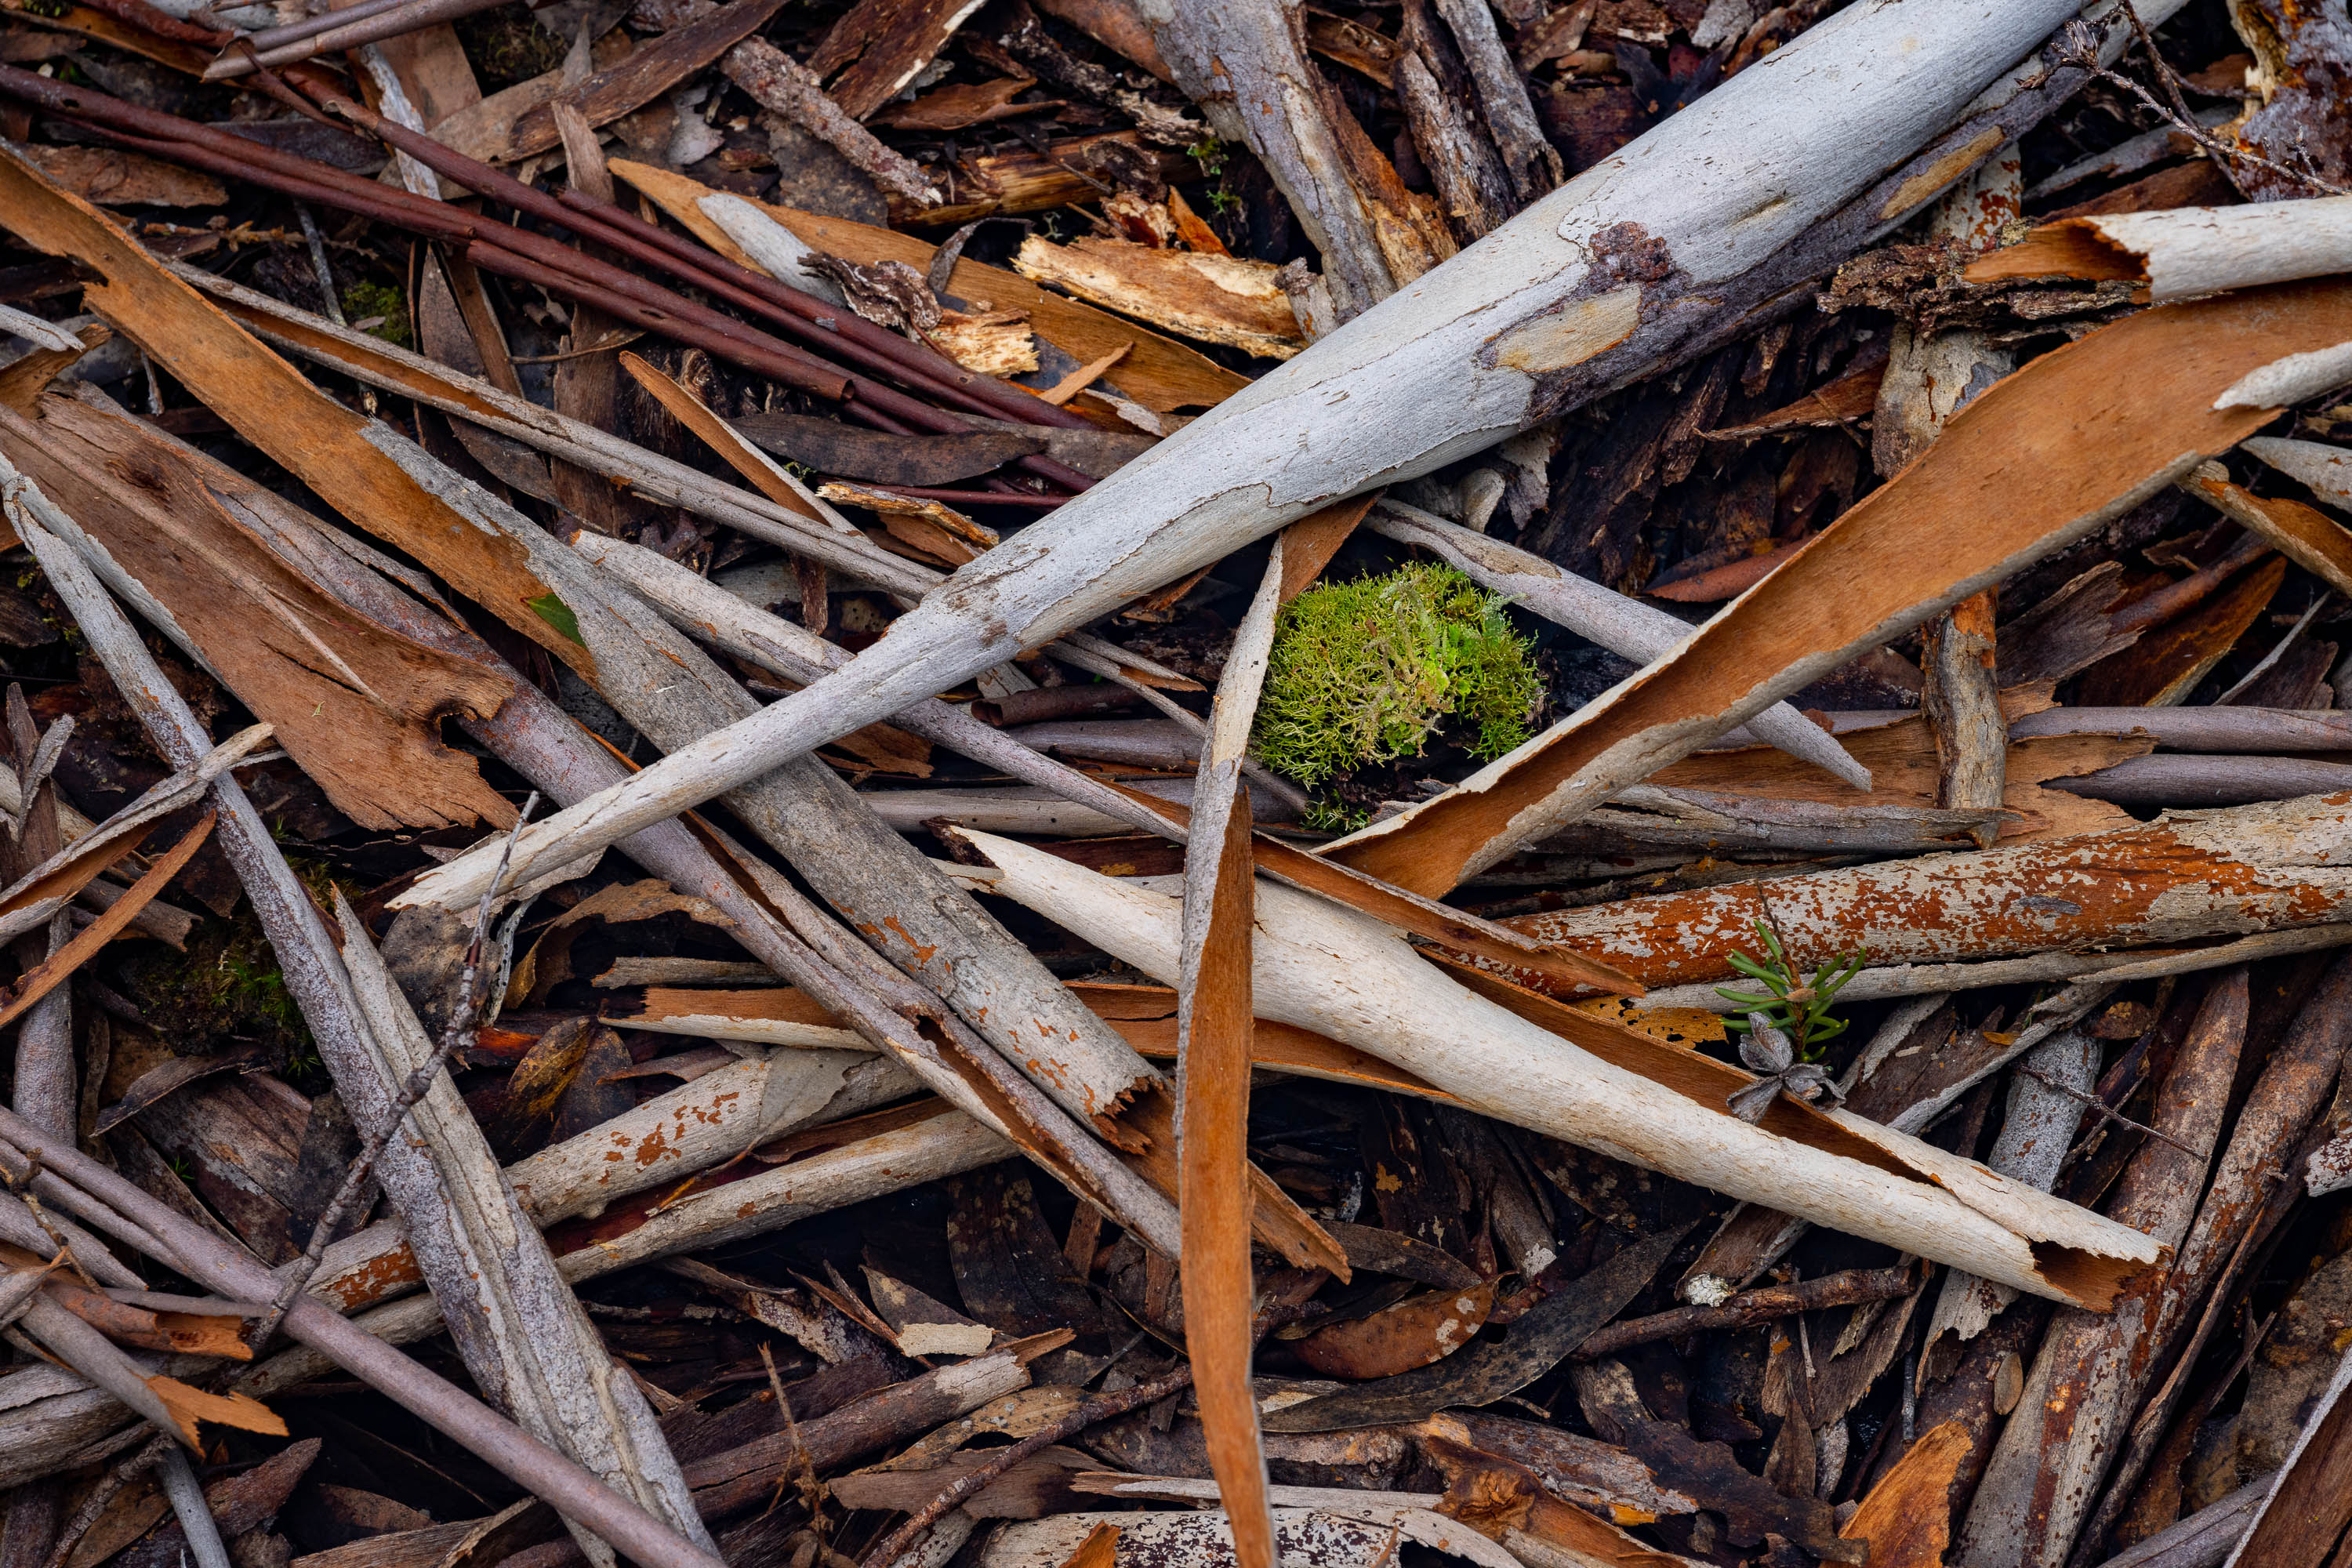 Leaf Litter detail, The Overland Track, Tasmania